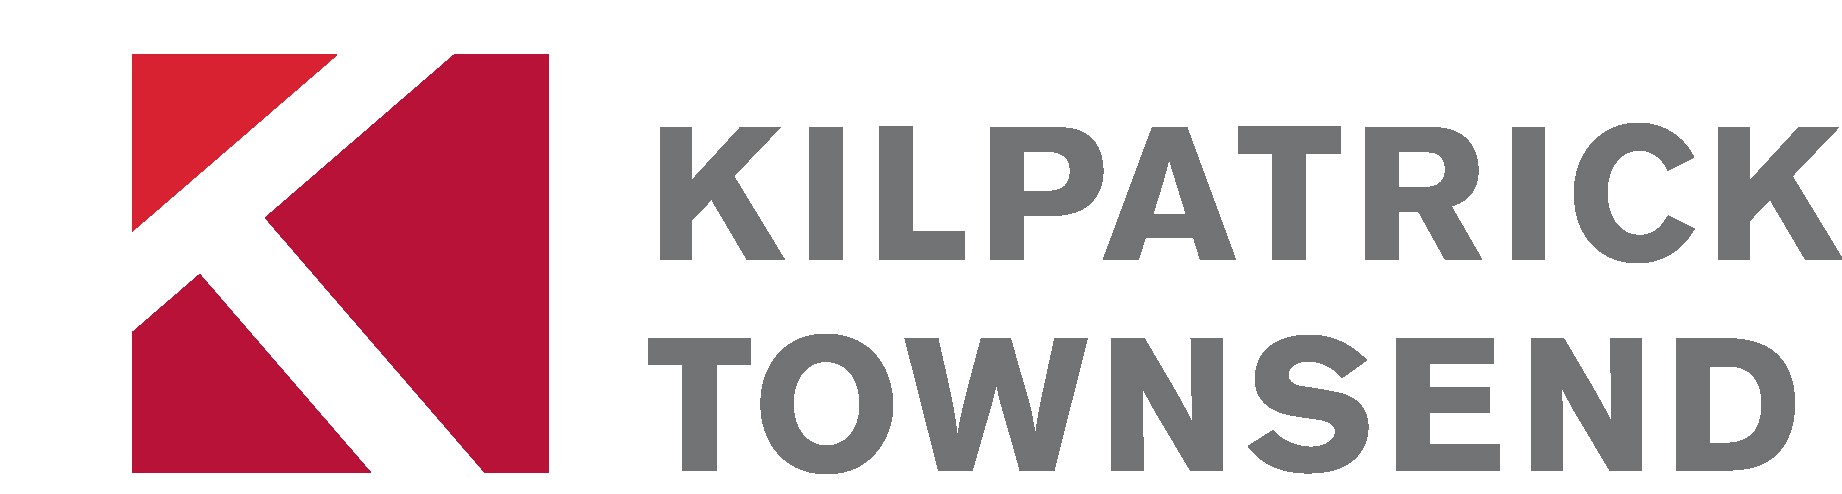 Kilpatrick Townsend Logo